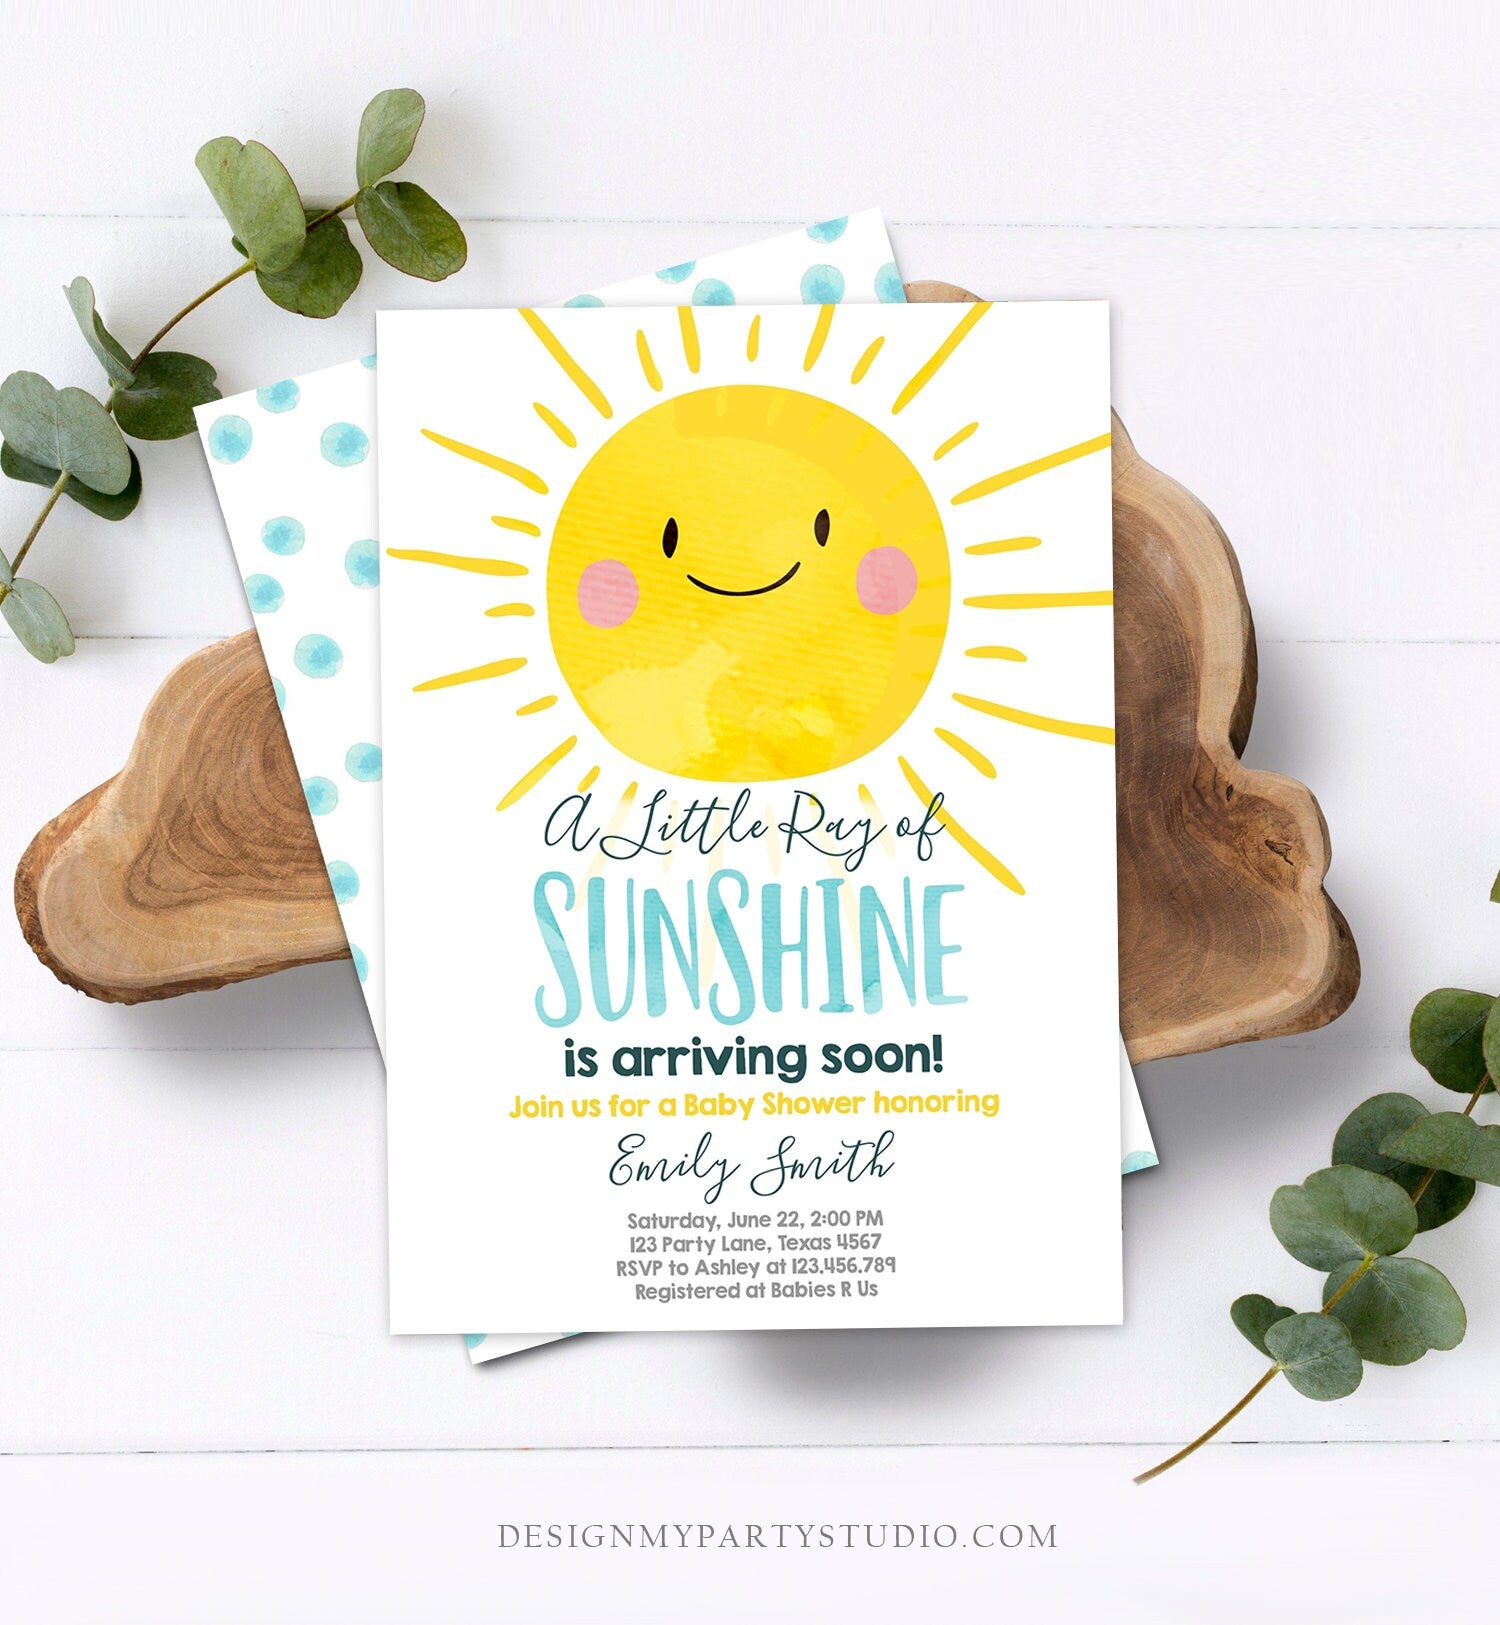 Editable Baby Shower Invitation A Ray of Sunshine Little Sunshine Blue Yellow Boy Invite Template Instant Download Digital Corjl 0141